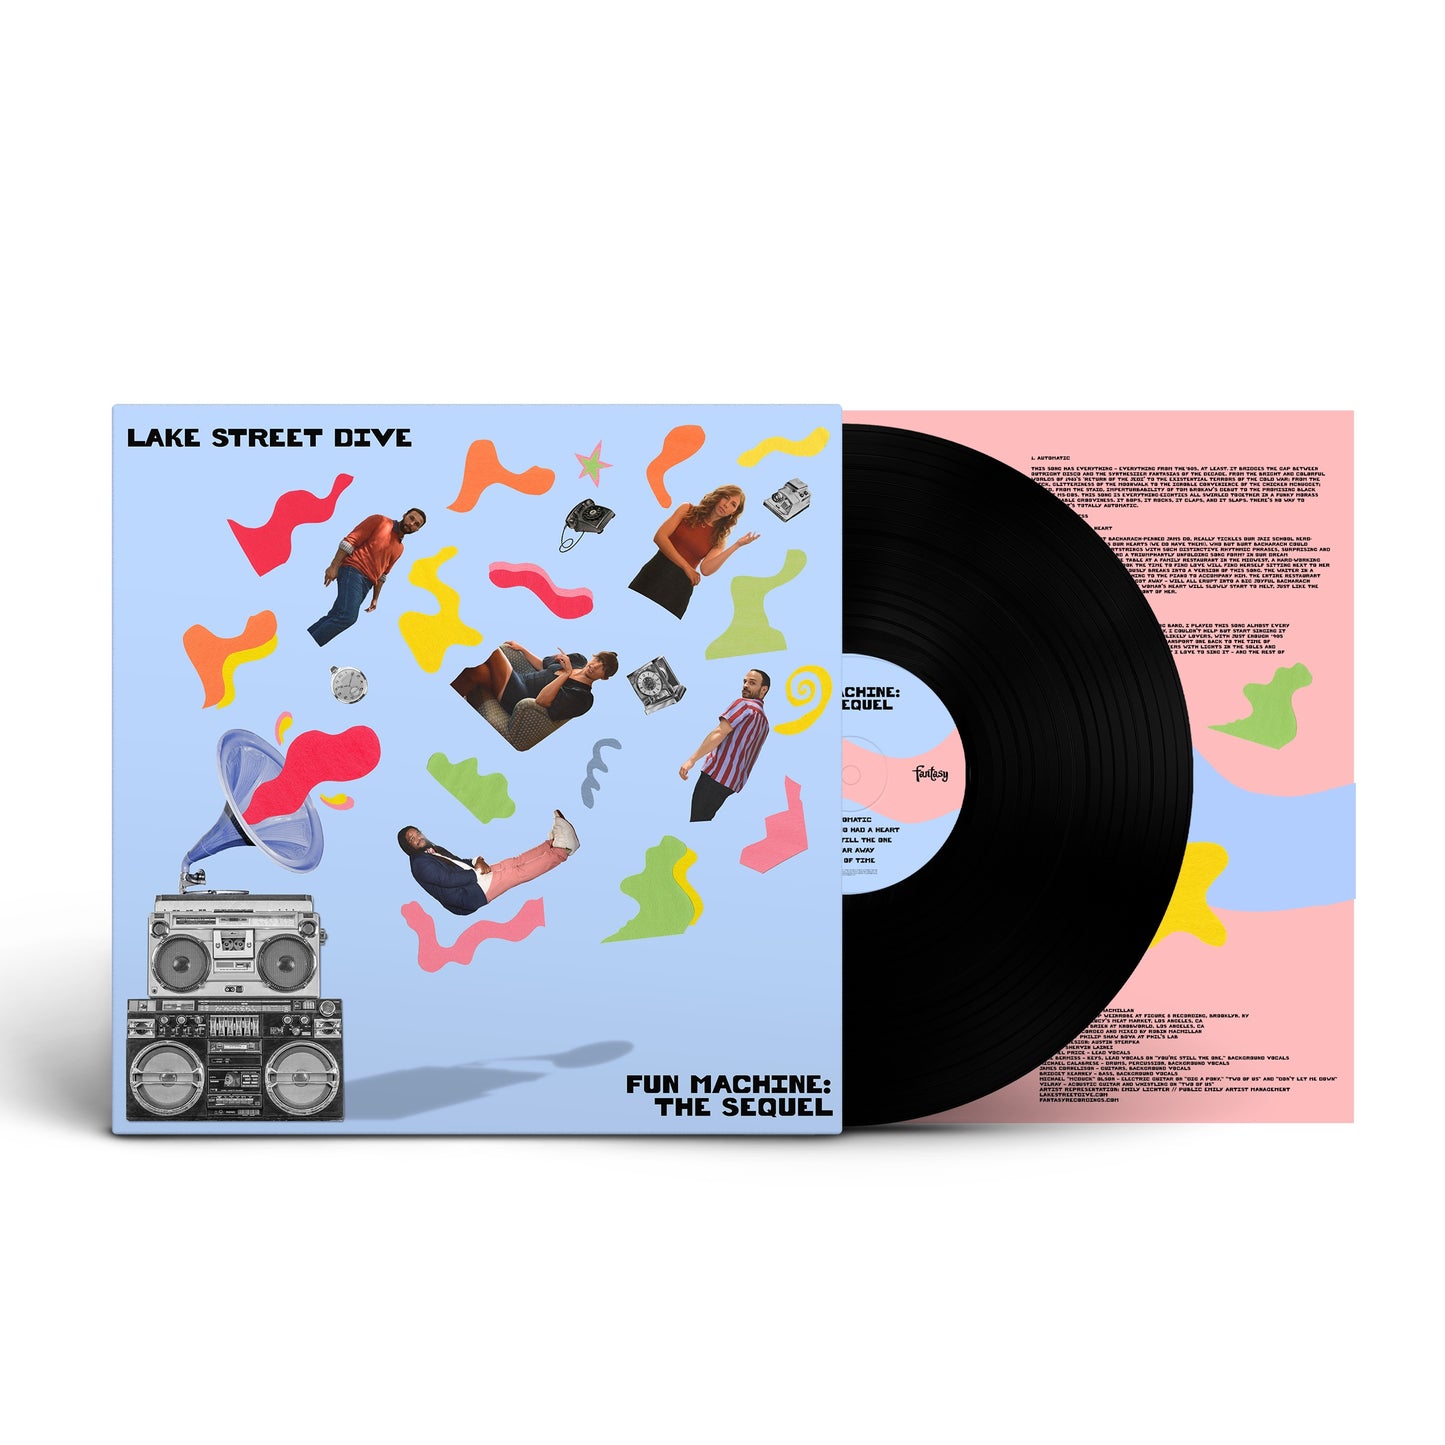 Lake Street Dive - Fun Machine: The Sequel [LP] - Vinyl